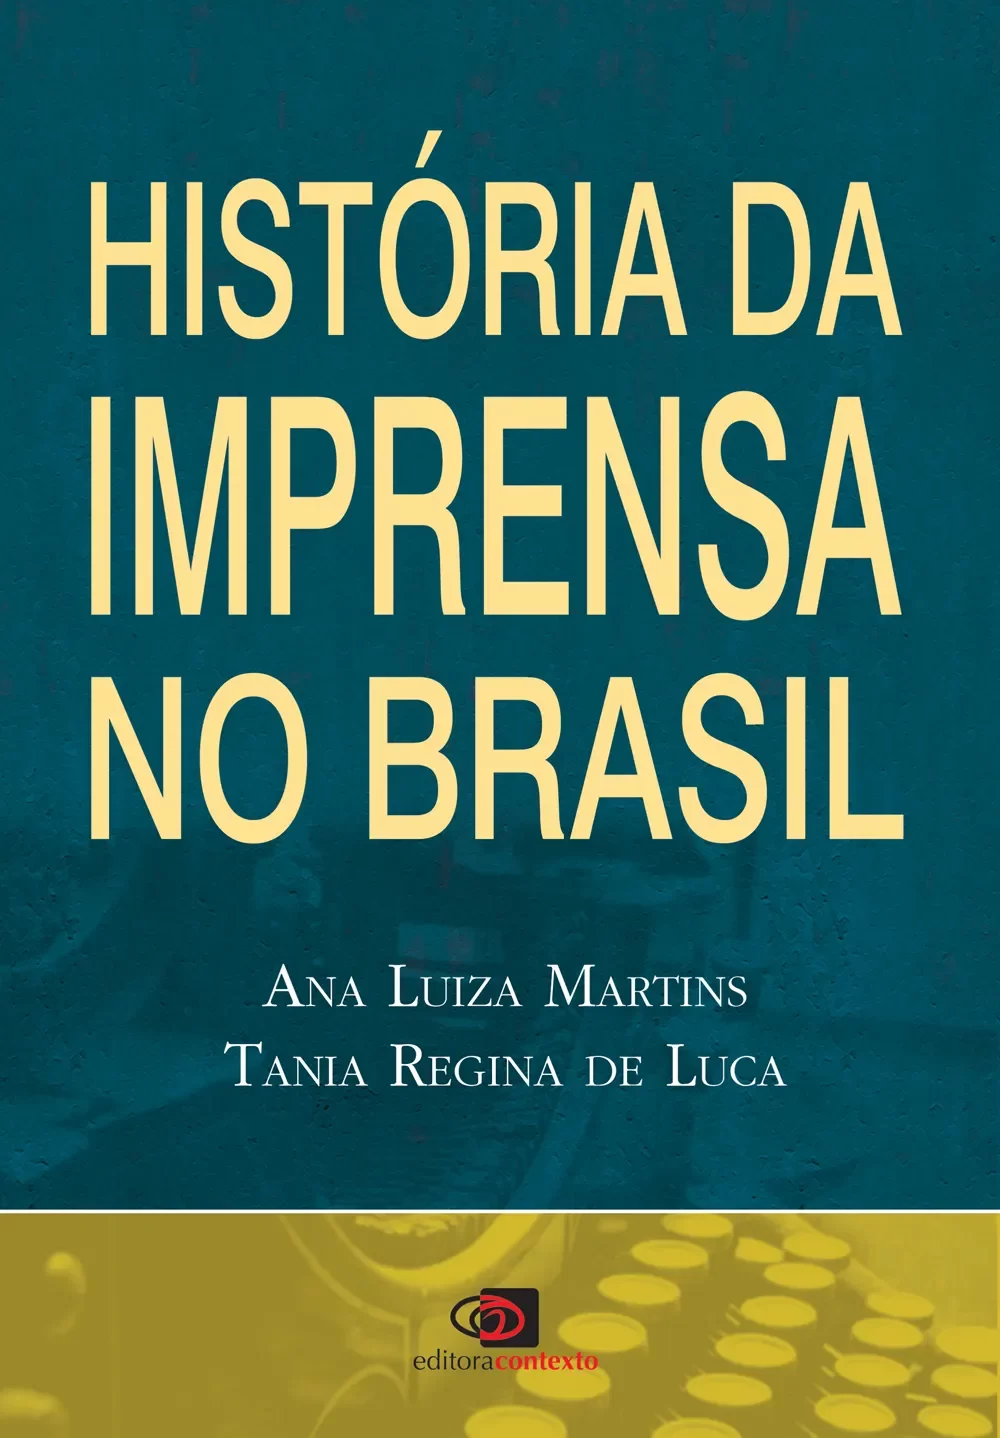 Ana Luíza de Castro Santos - Brasília, Distrito Federal, Brasil